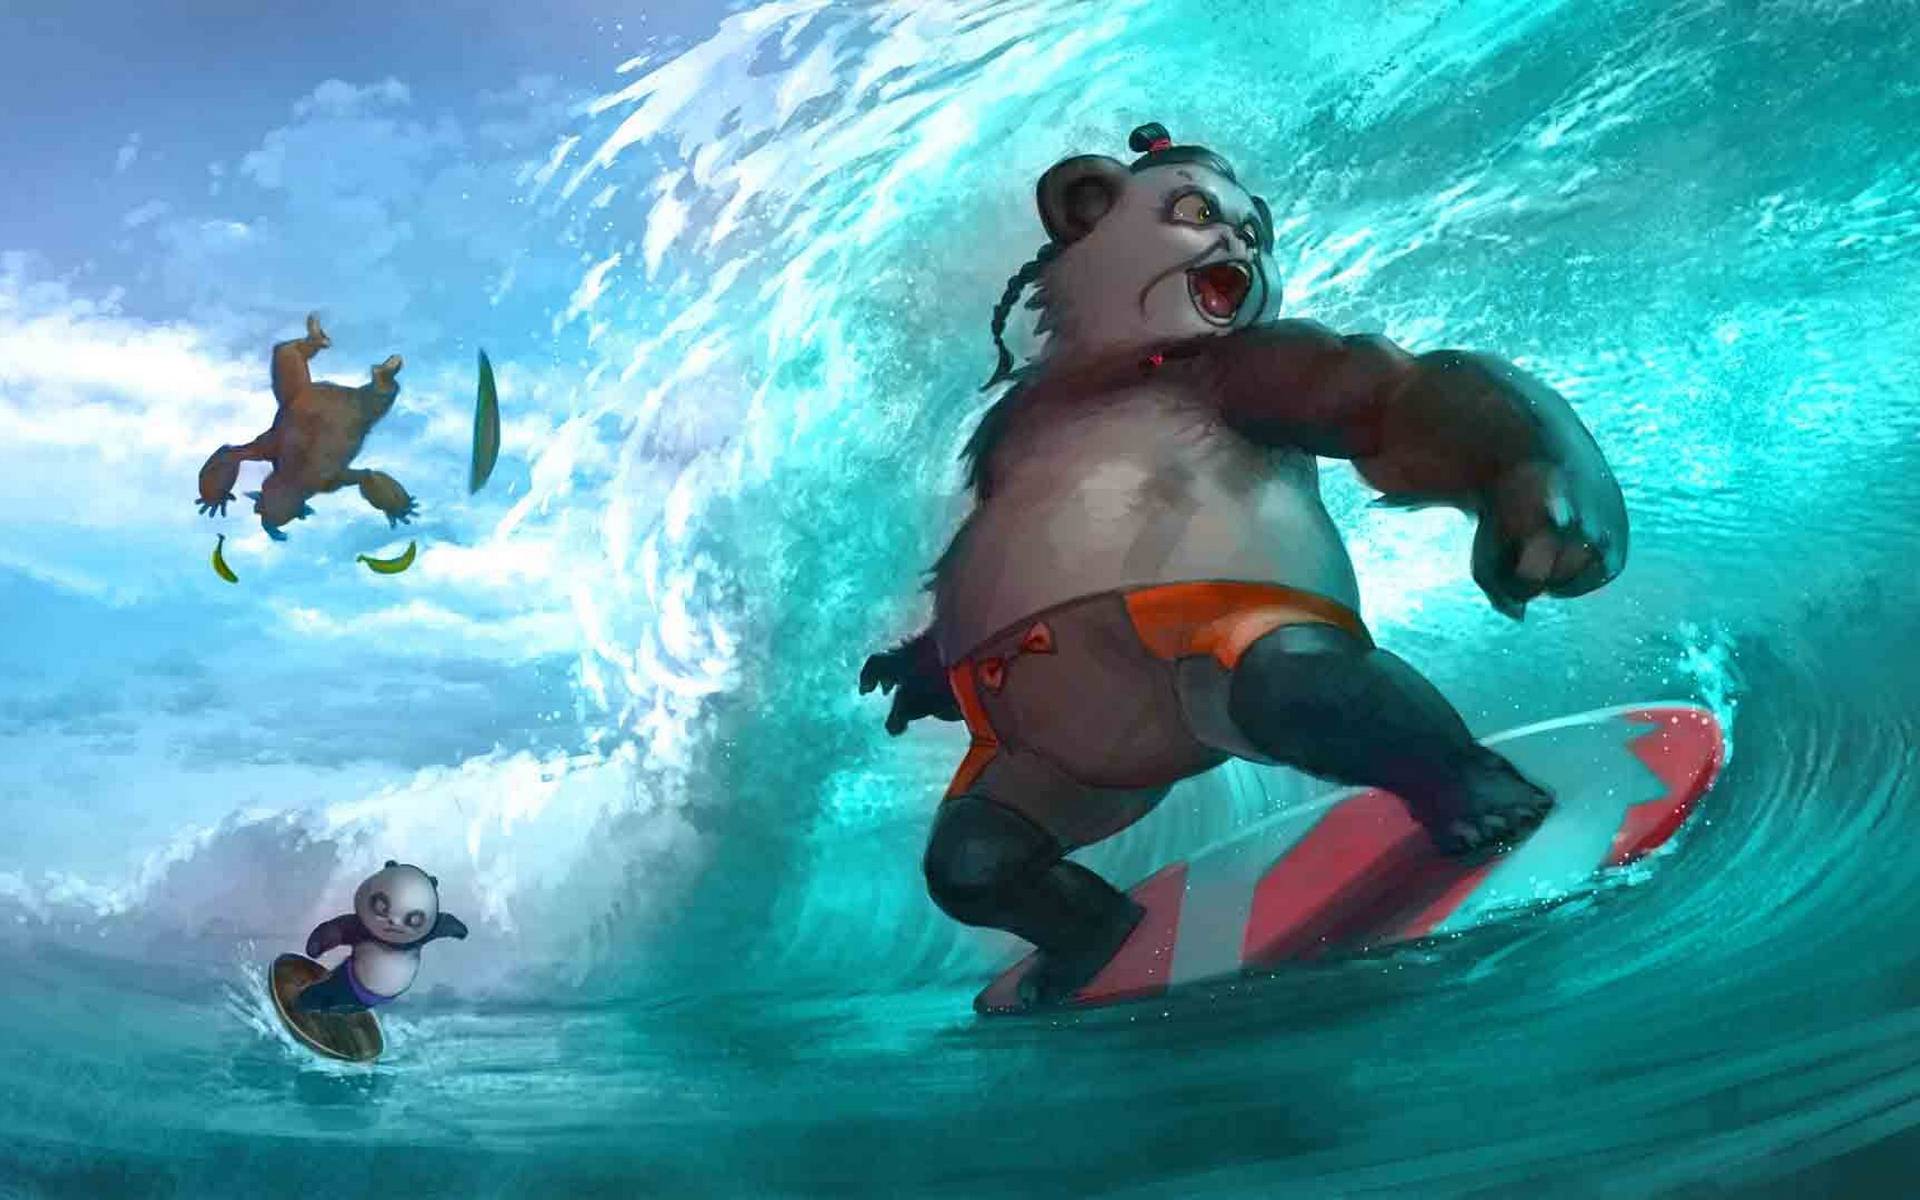 Wallpapers panda surfing sea on the desktop